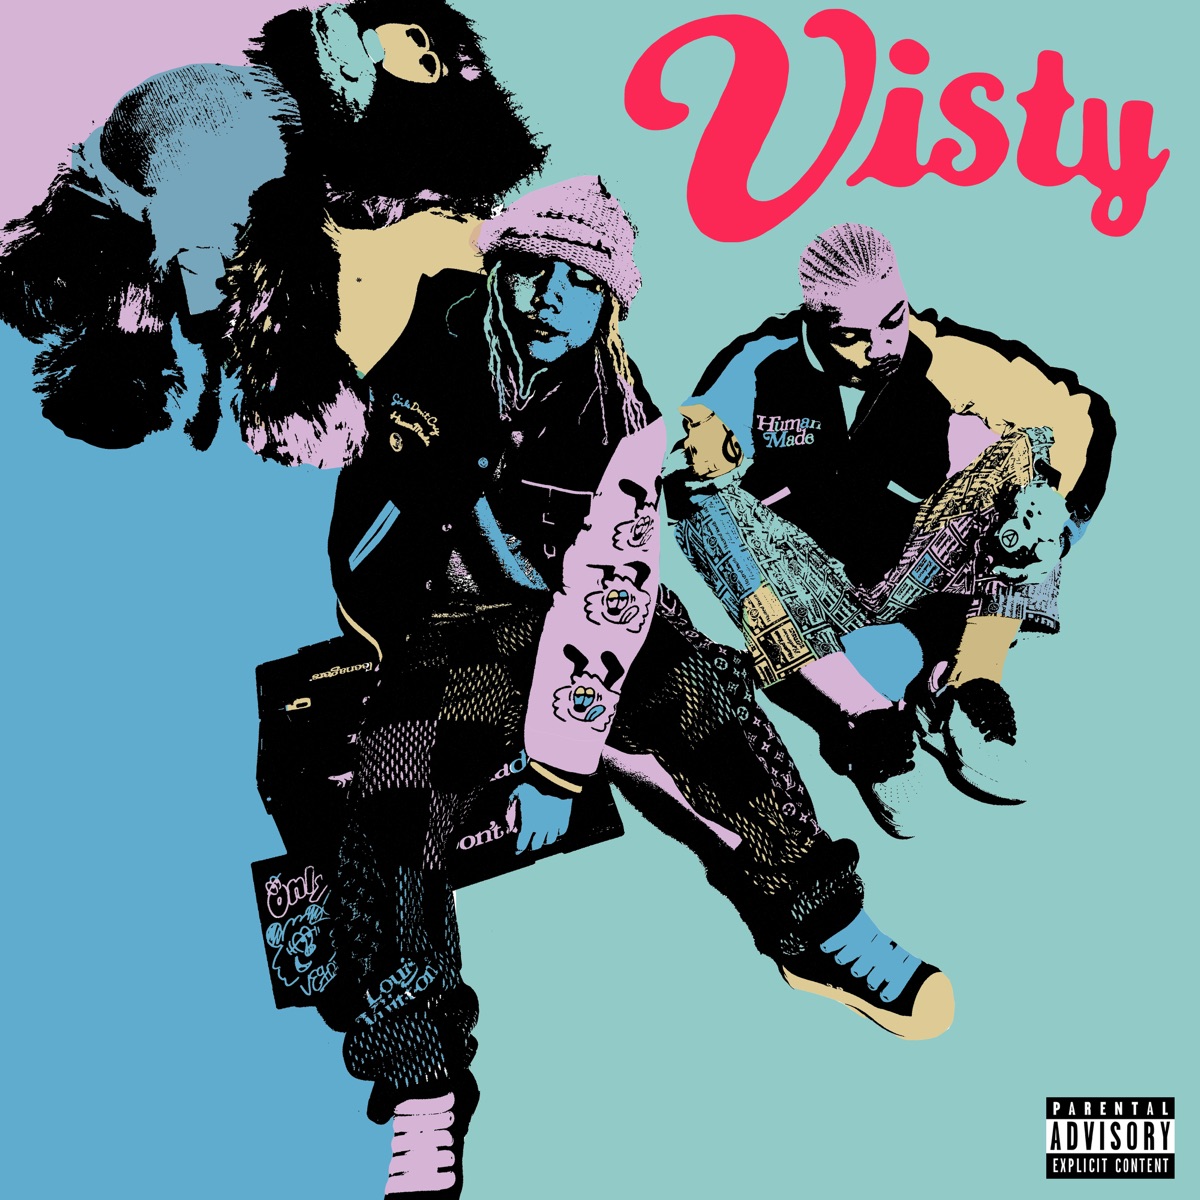 『Only U & HEZRON - VISTY』収録の『VISTY』ジャケット